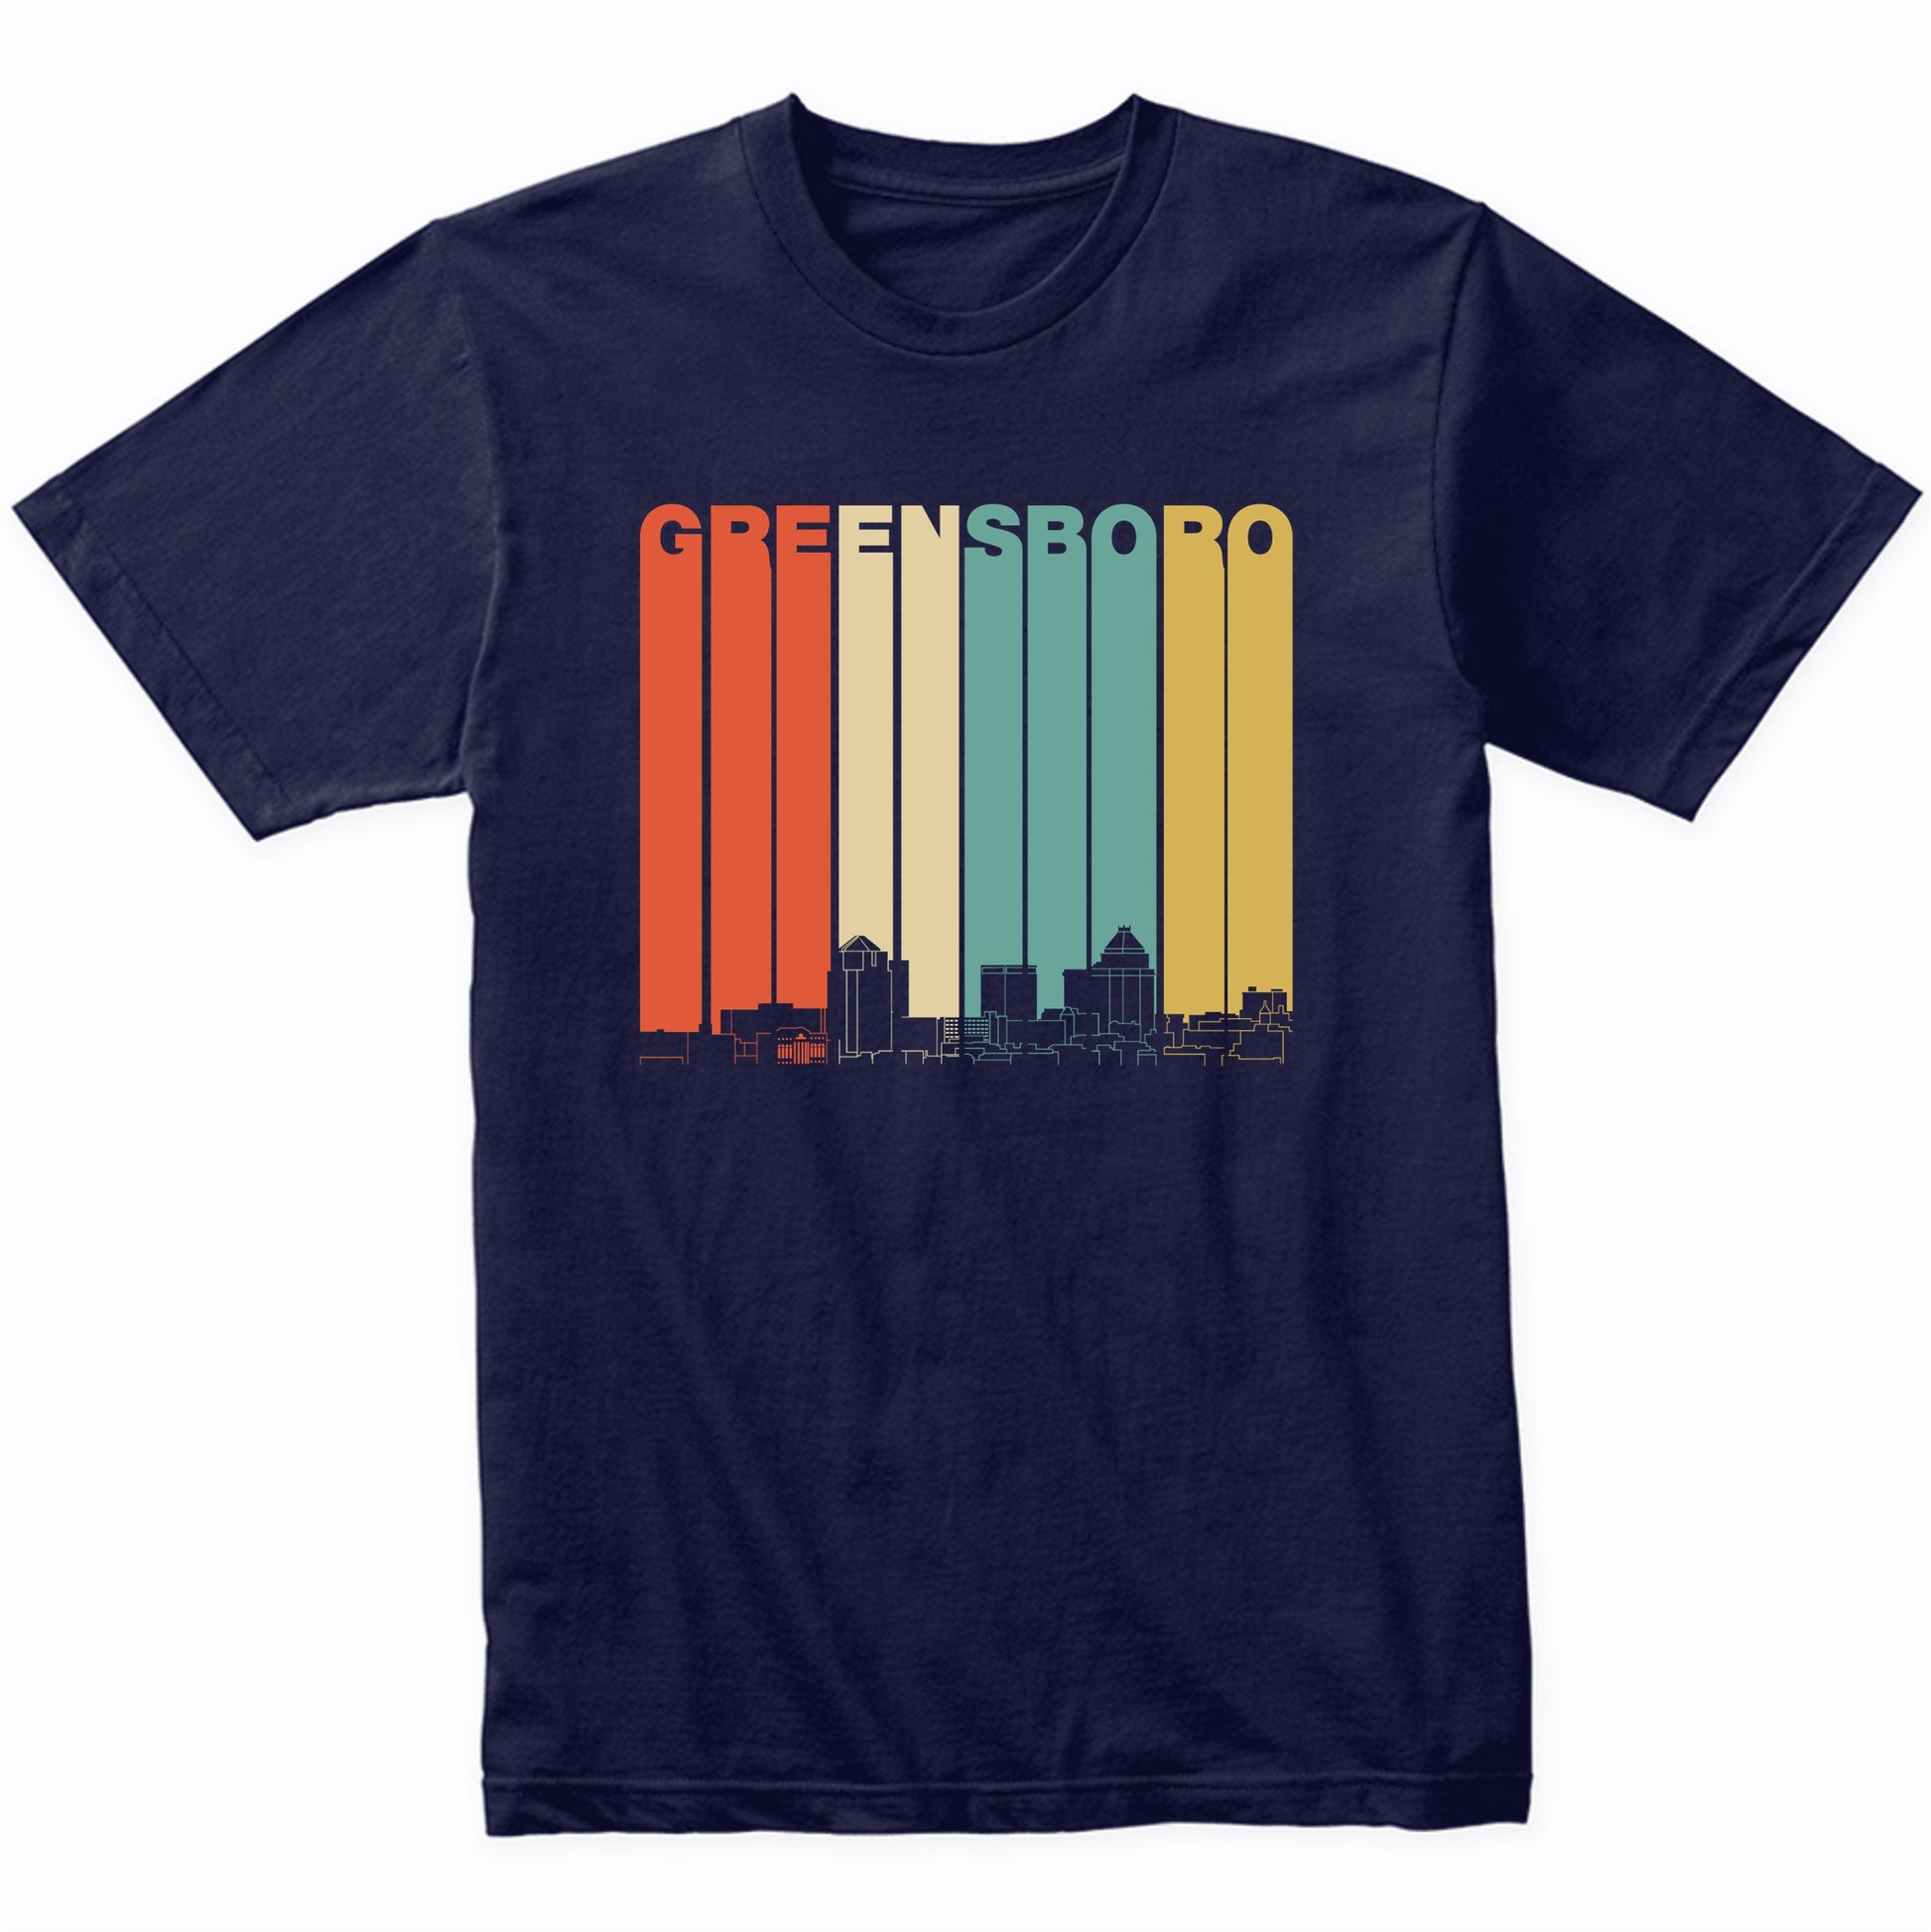 Vintage 1970's Style Greensboro North Carolina Skyline Shirt